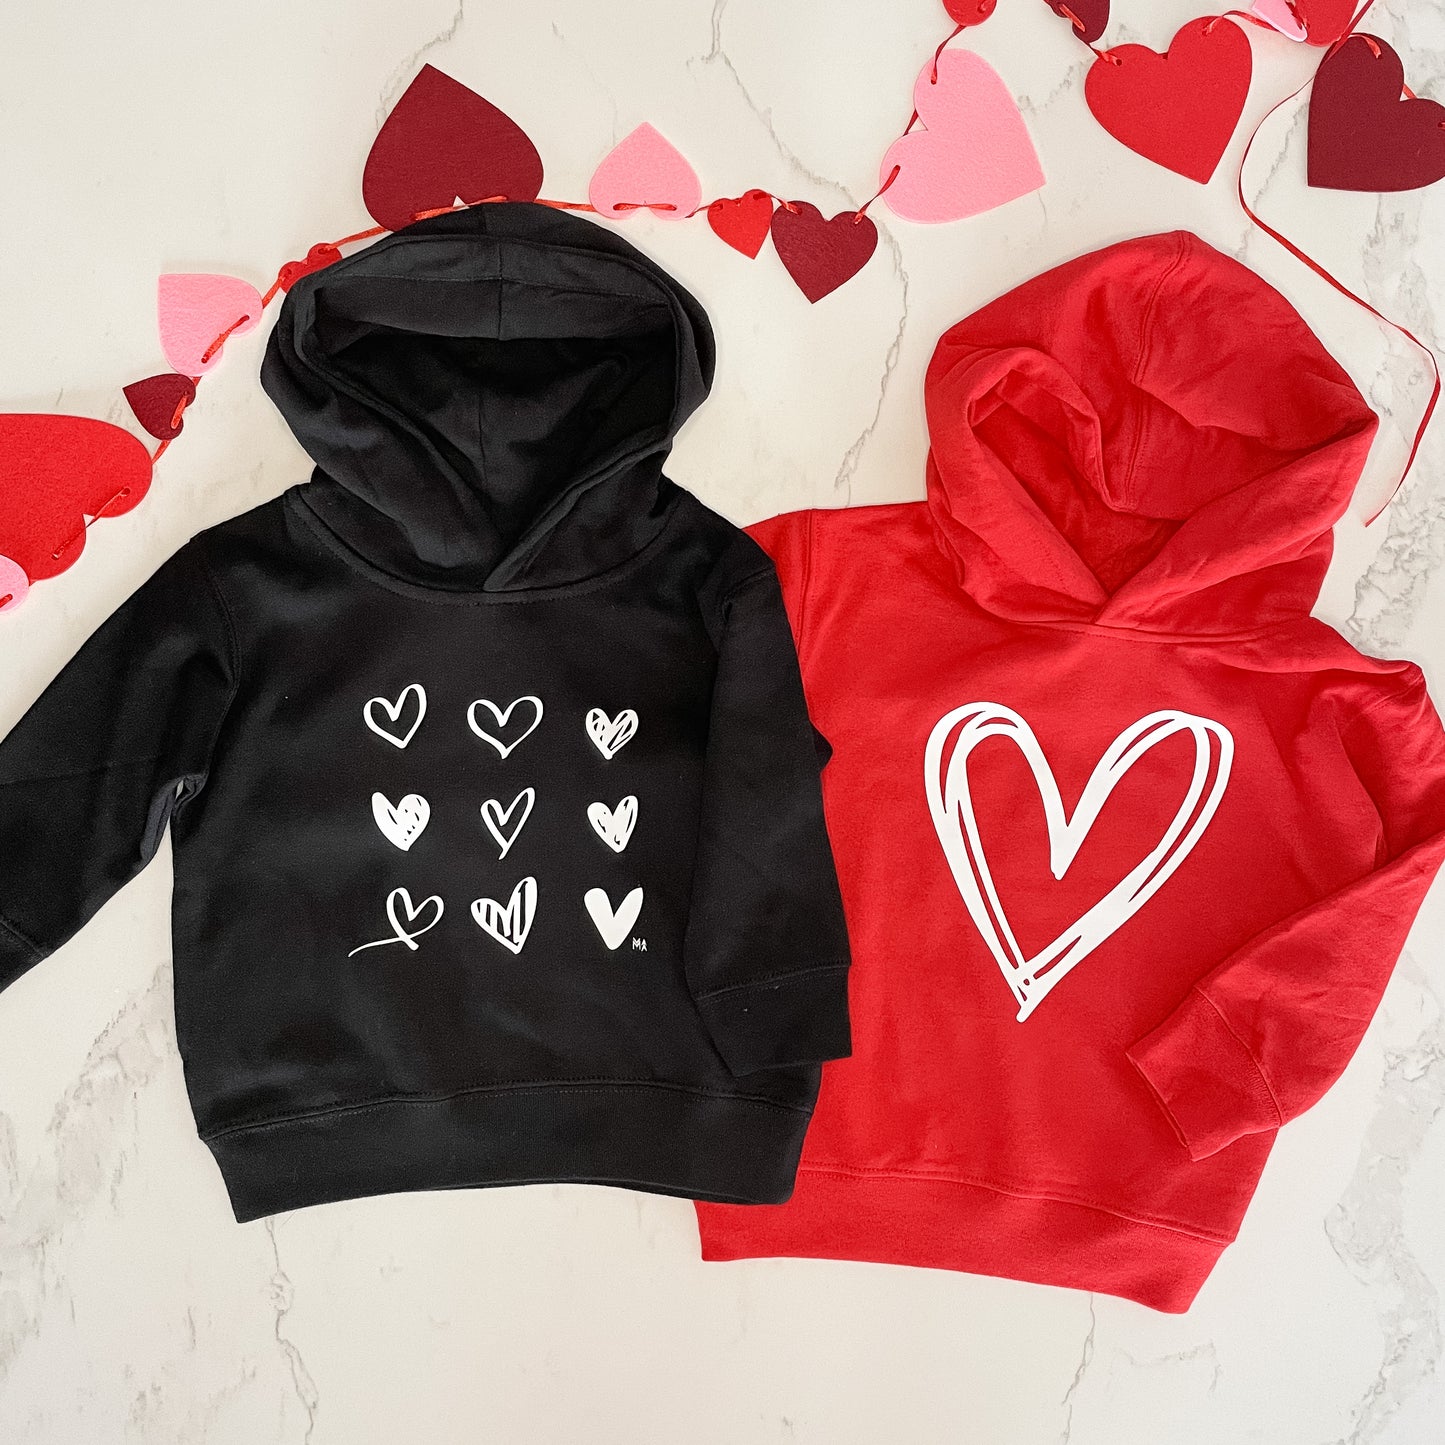 Child LOVE & Black Hearts Sweaters